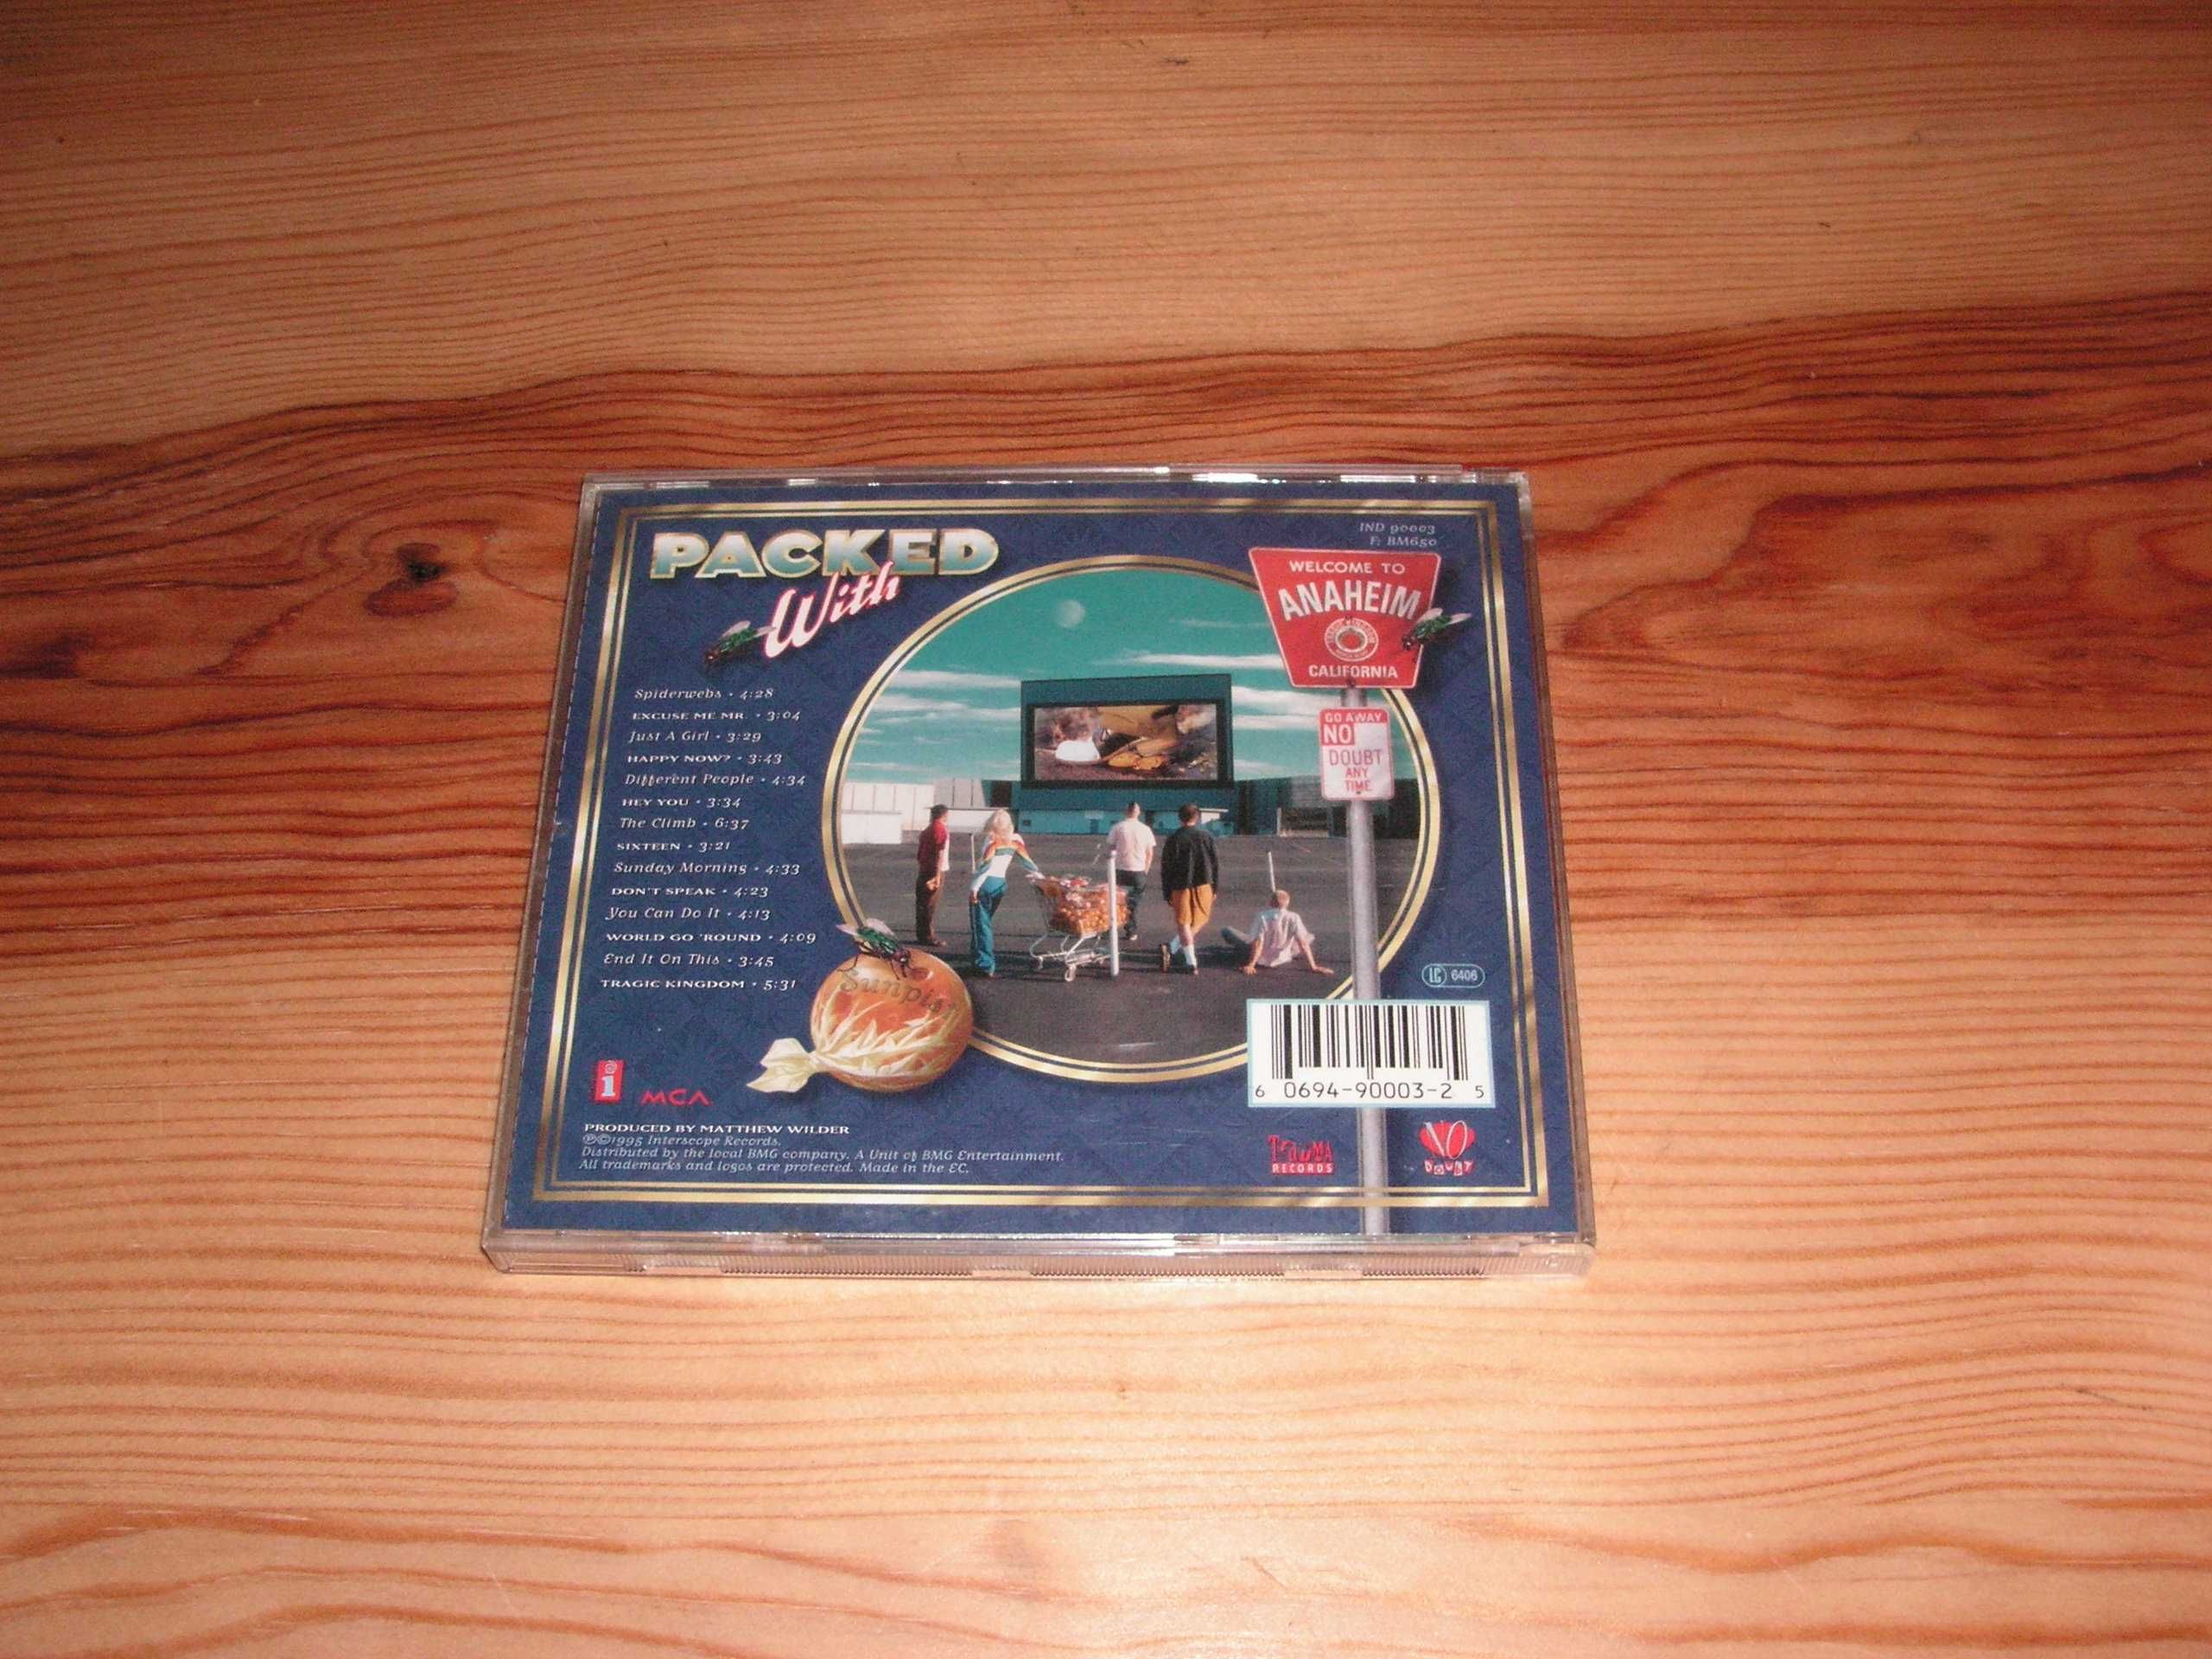 CD No Doubt - Tragic Kingdom